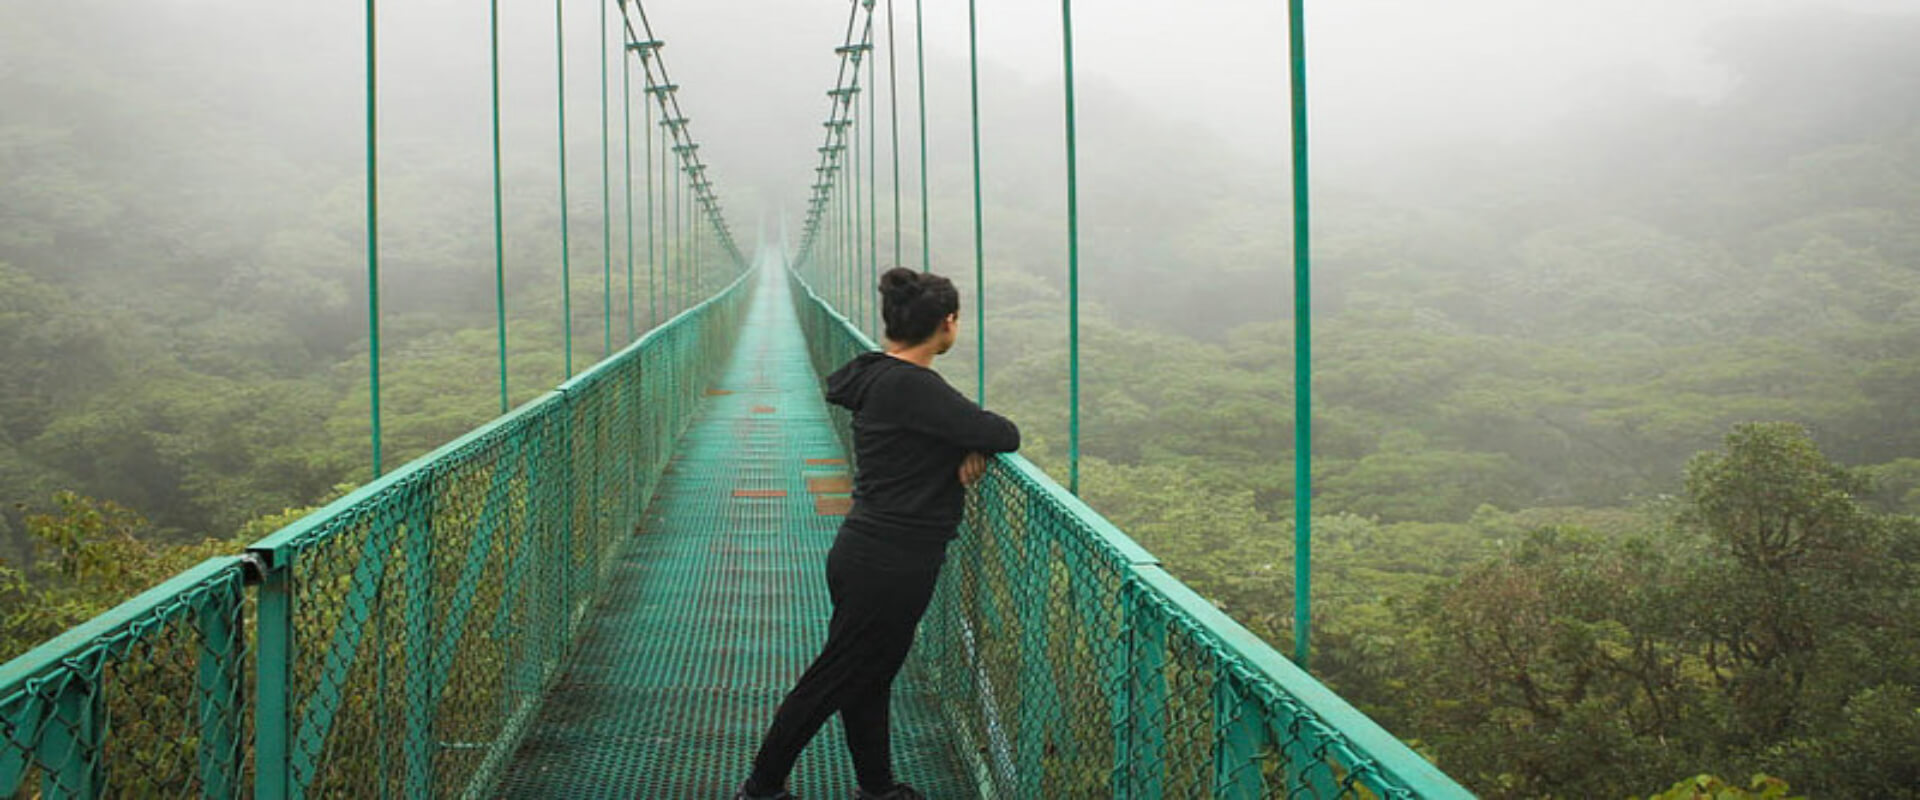 Aventurero Respetuoso del medio ambiente agenda Tirolesa, puentes colgantes y mariposas | Costa Rica Jade Tours